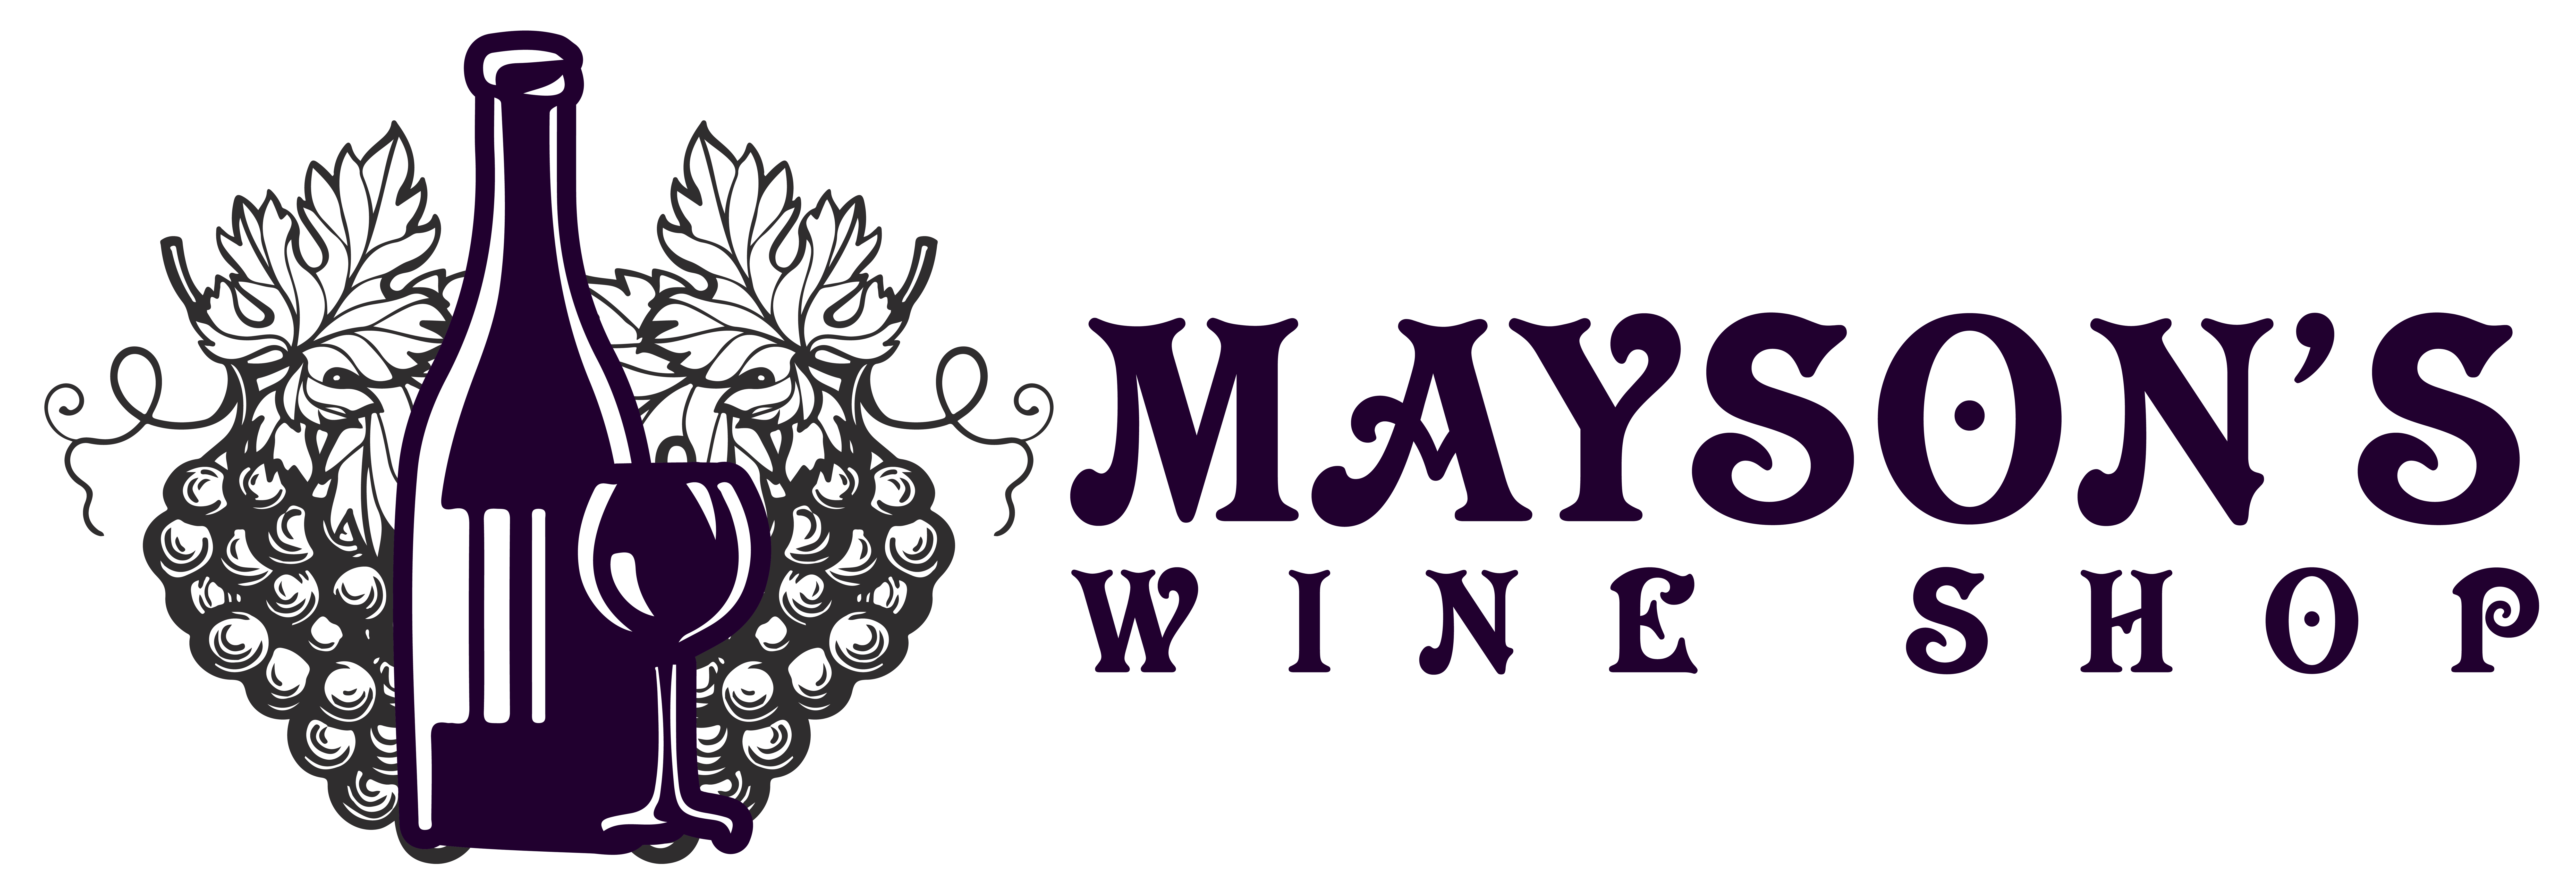 Mayson's Wine Shop